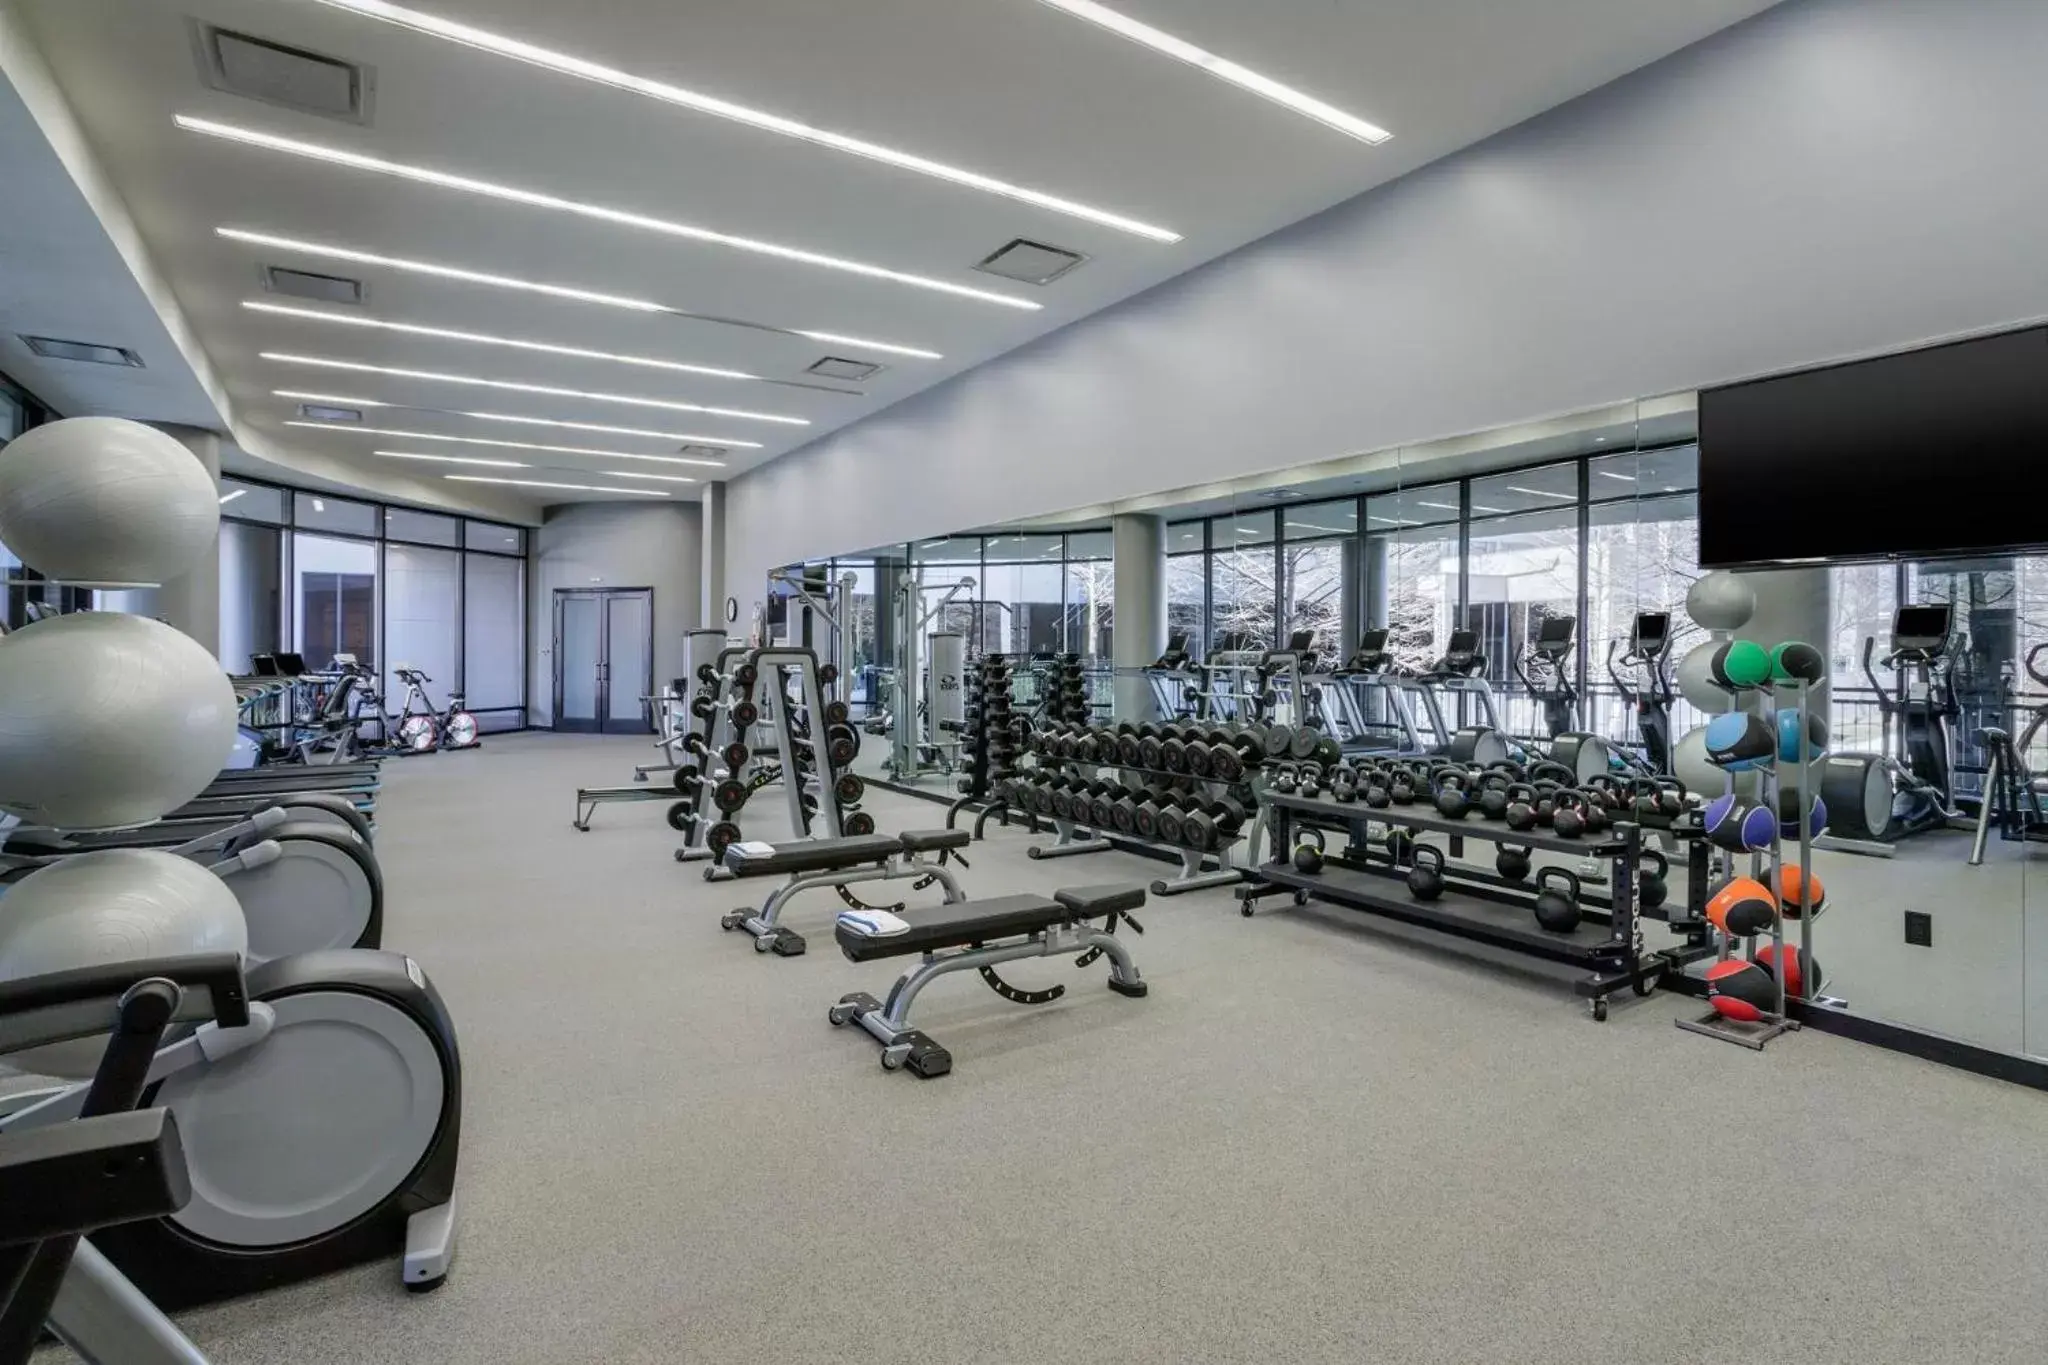 Fitness centre/facilities, Fitness Center/Facilities in Omni Houston Hotel